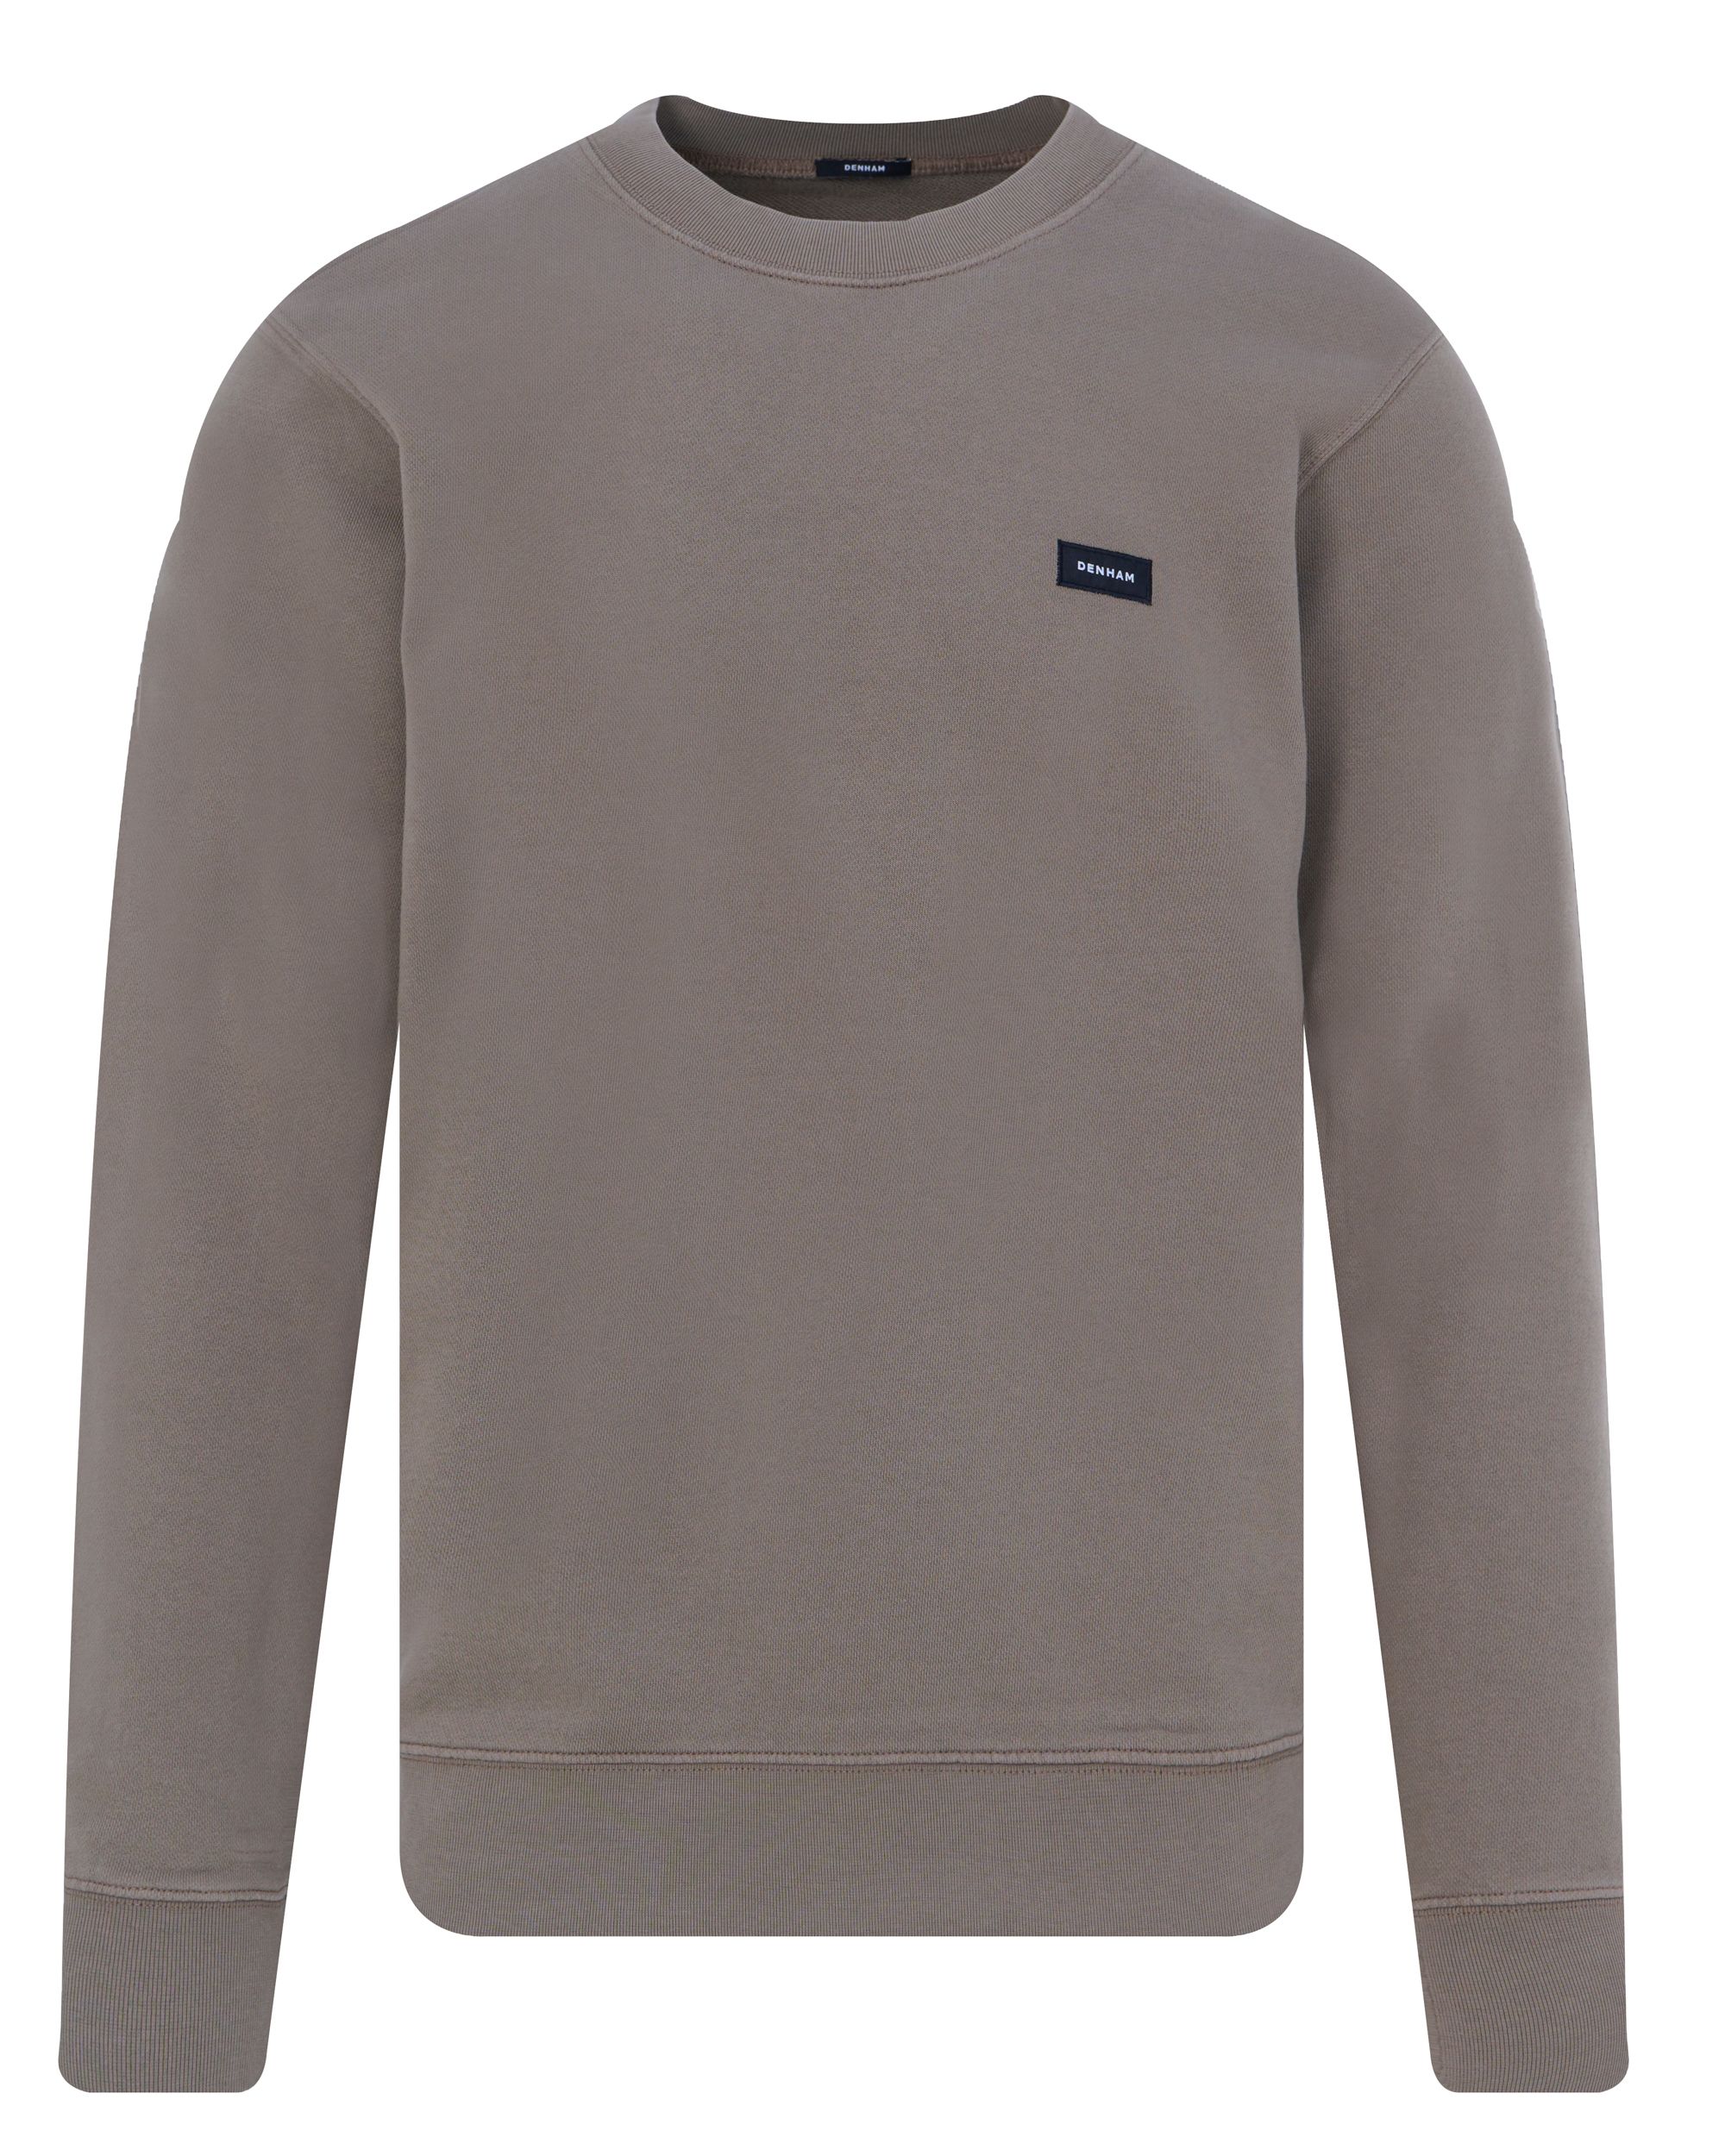 DENHAM Slim Sweater Rood 090986-001-XL